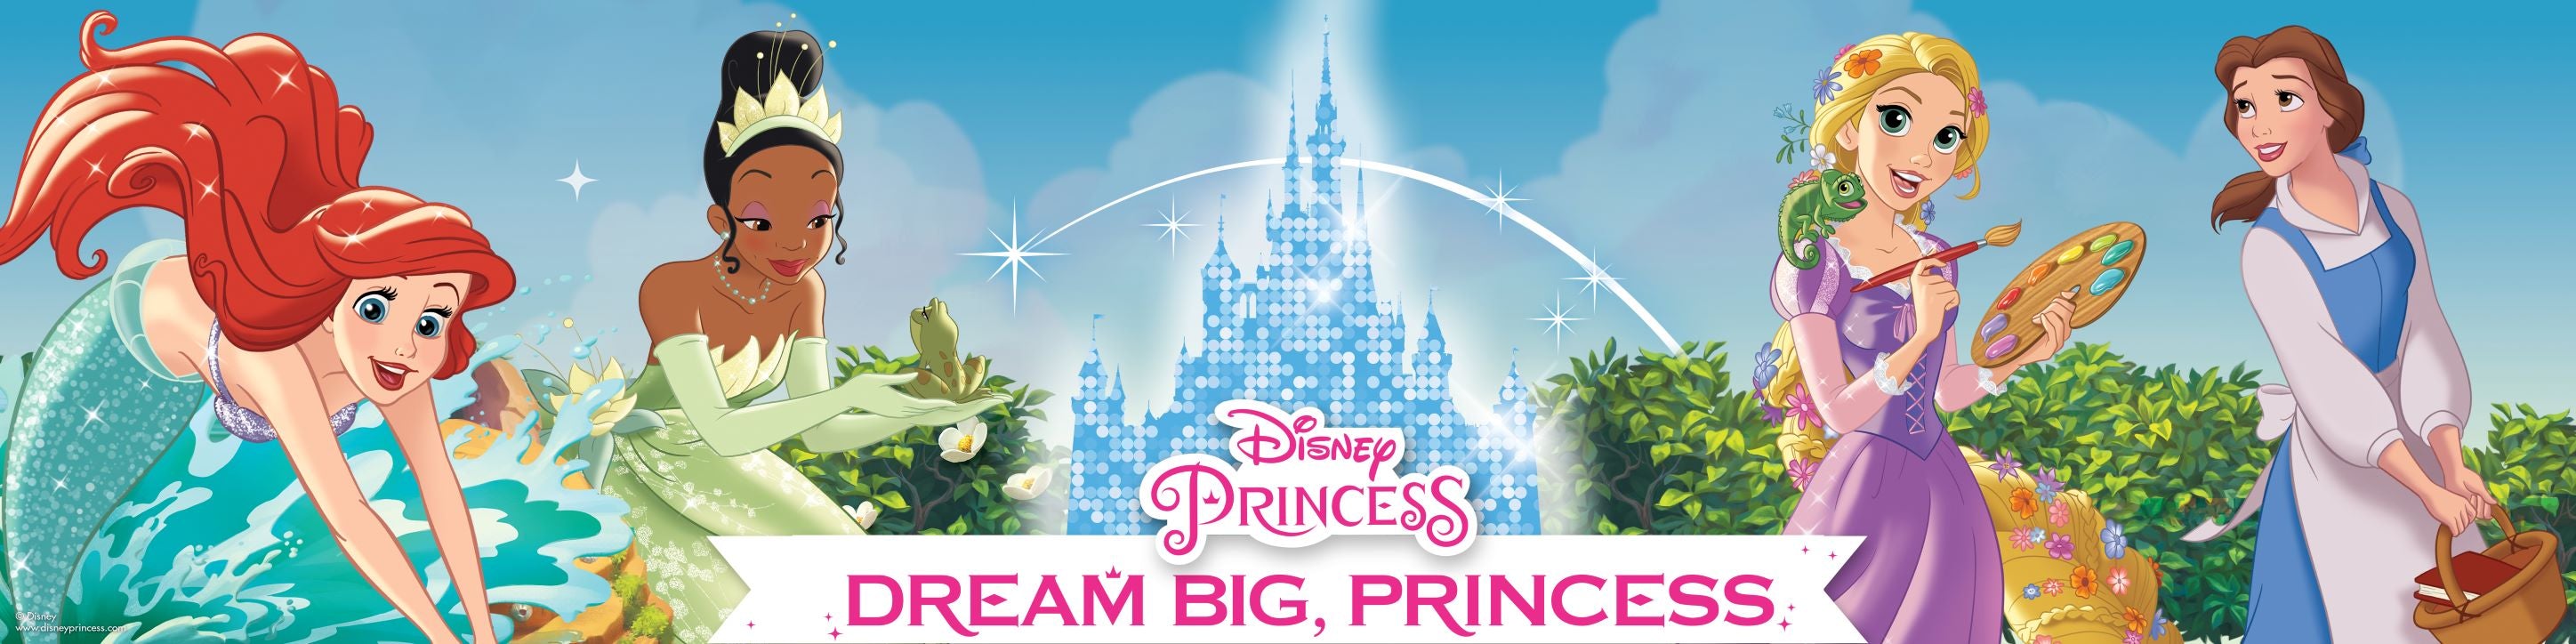 Déguisement Disney Princess™ - Fairytale™ - Mulan™